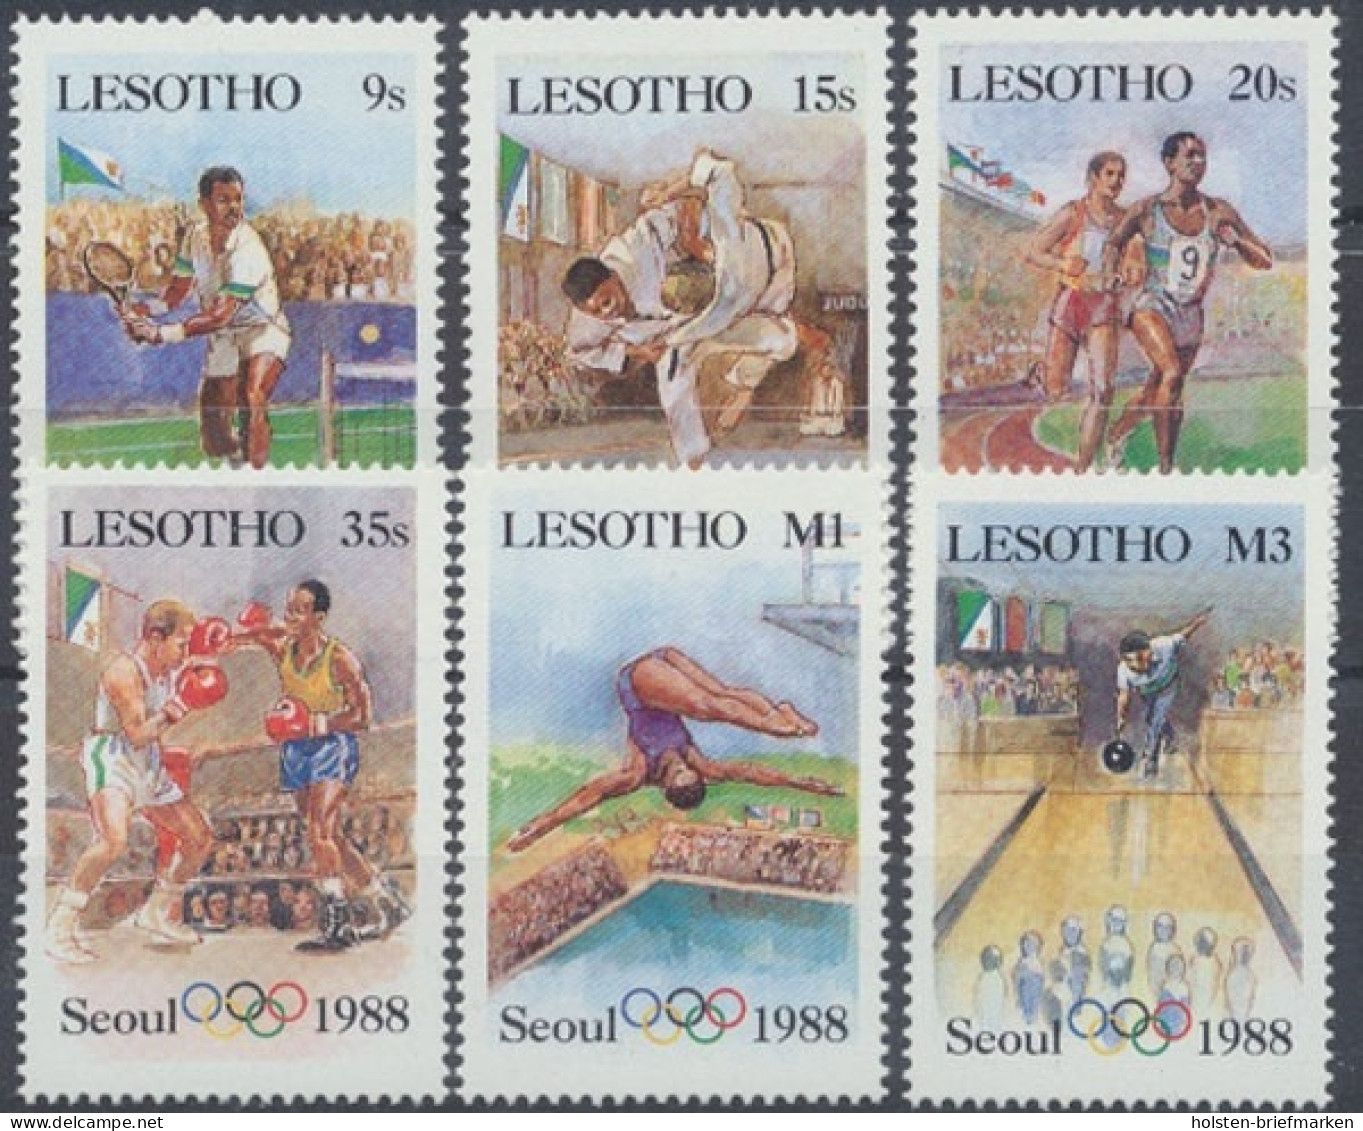 Lesotho, MiNr. 622-627, Postfrisch - Lesotho (1966-...)